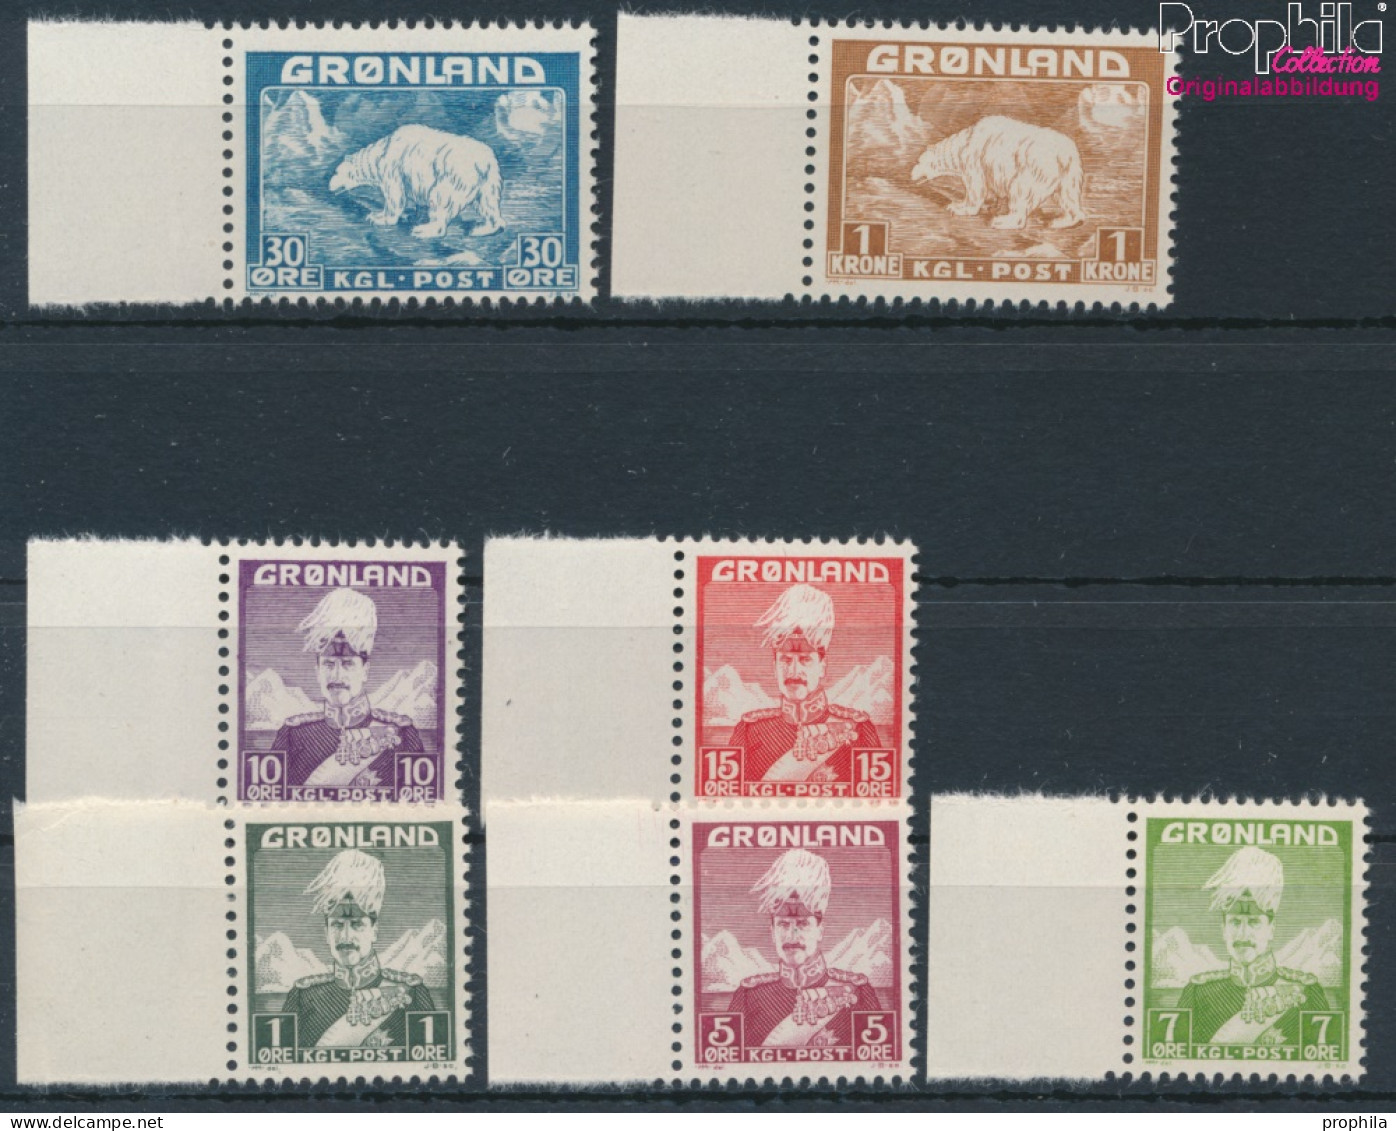 Dänemark - Grönland Postfrisch Christian X. 1938 König Christian X.  (10174202 - Gebraucht